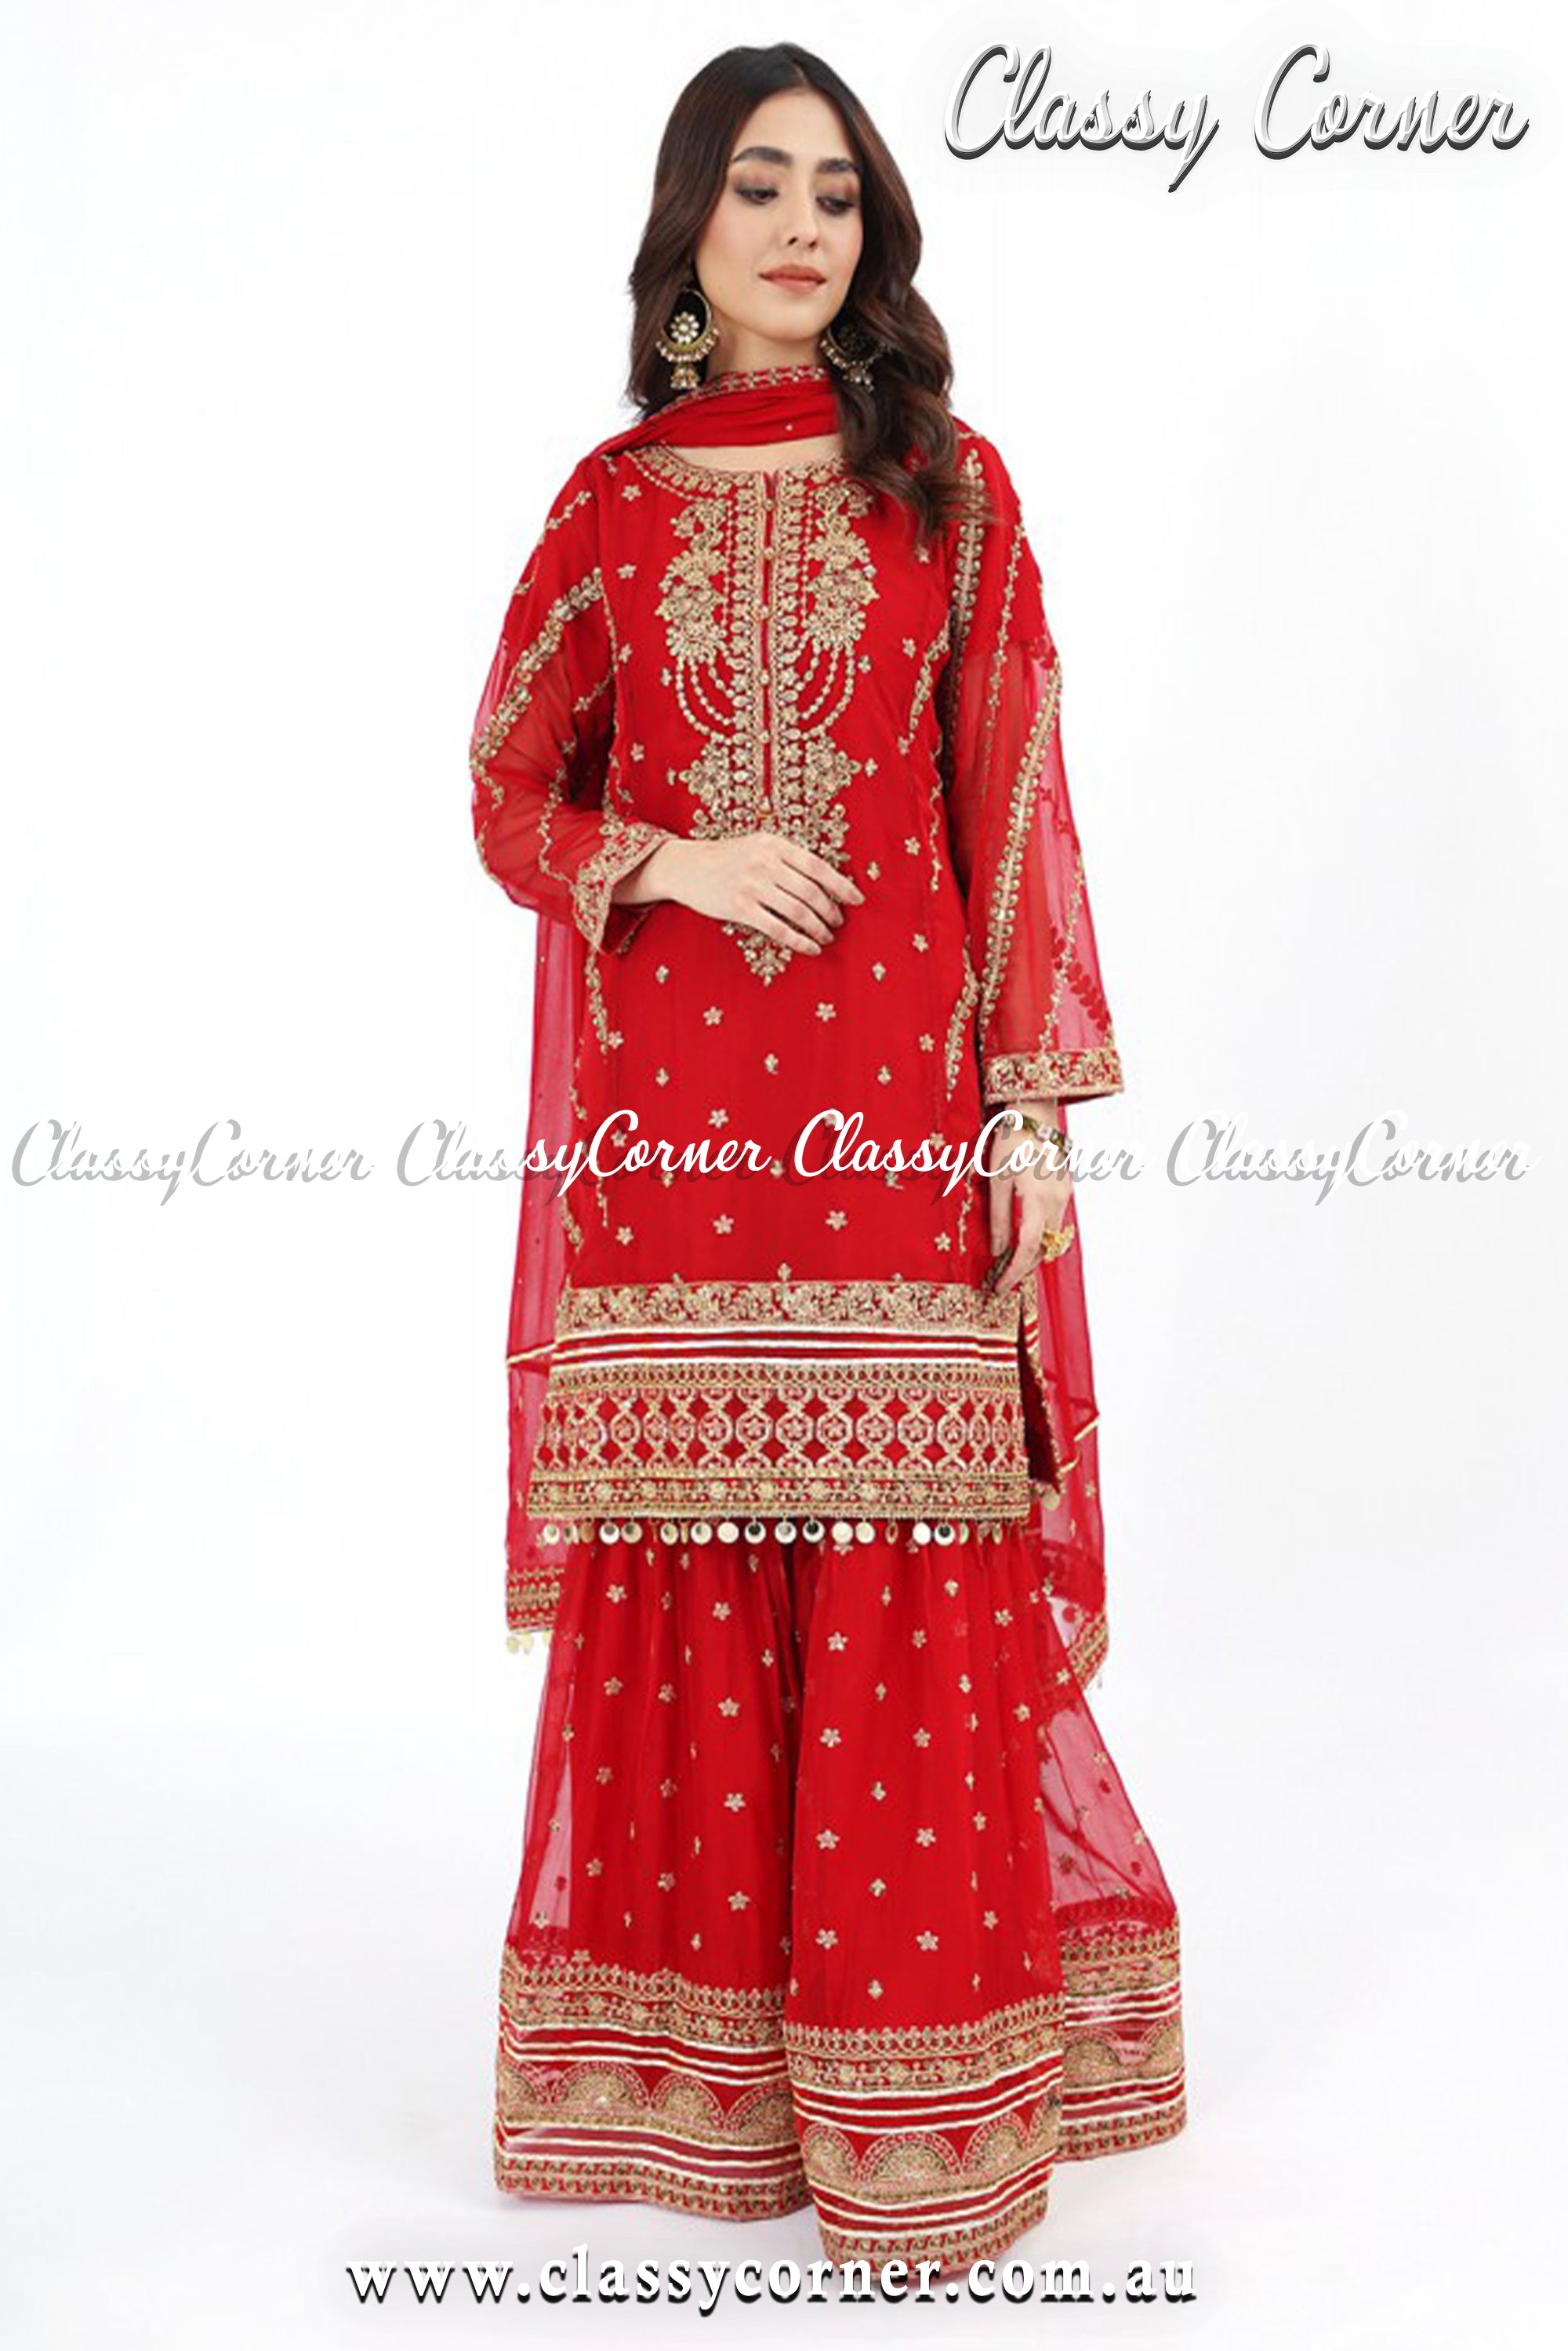 Red Gold Chiffon Gharara Outfit - Classy Corner